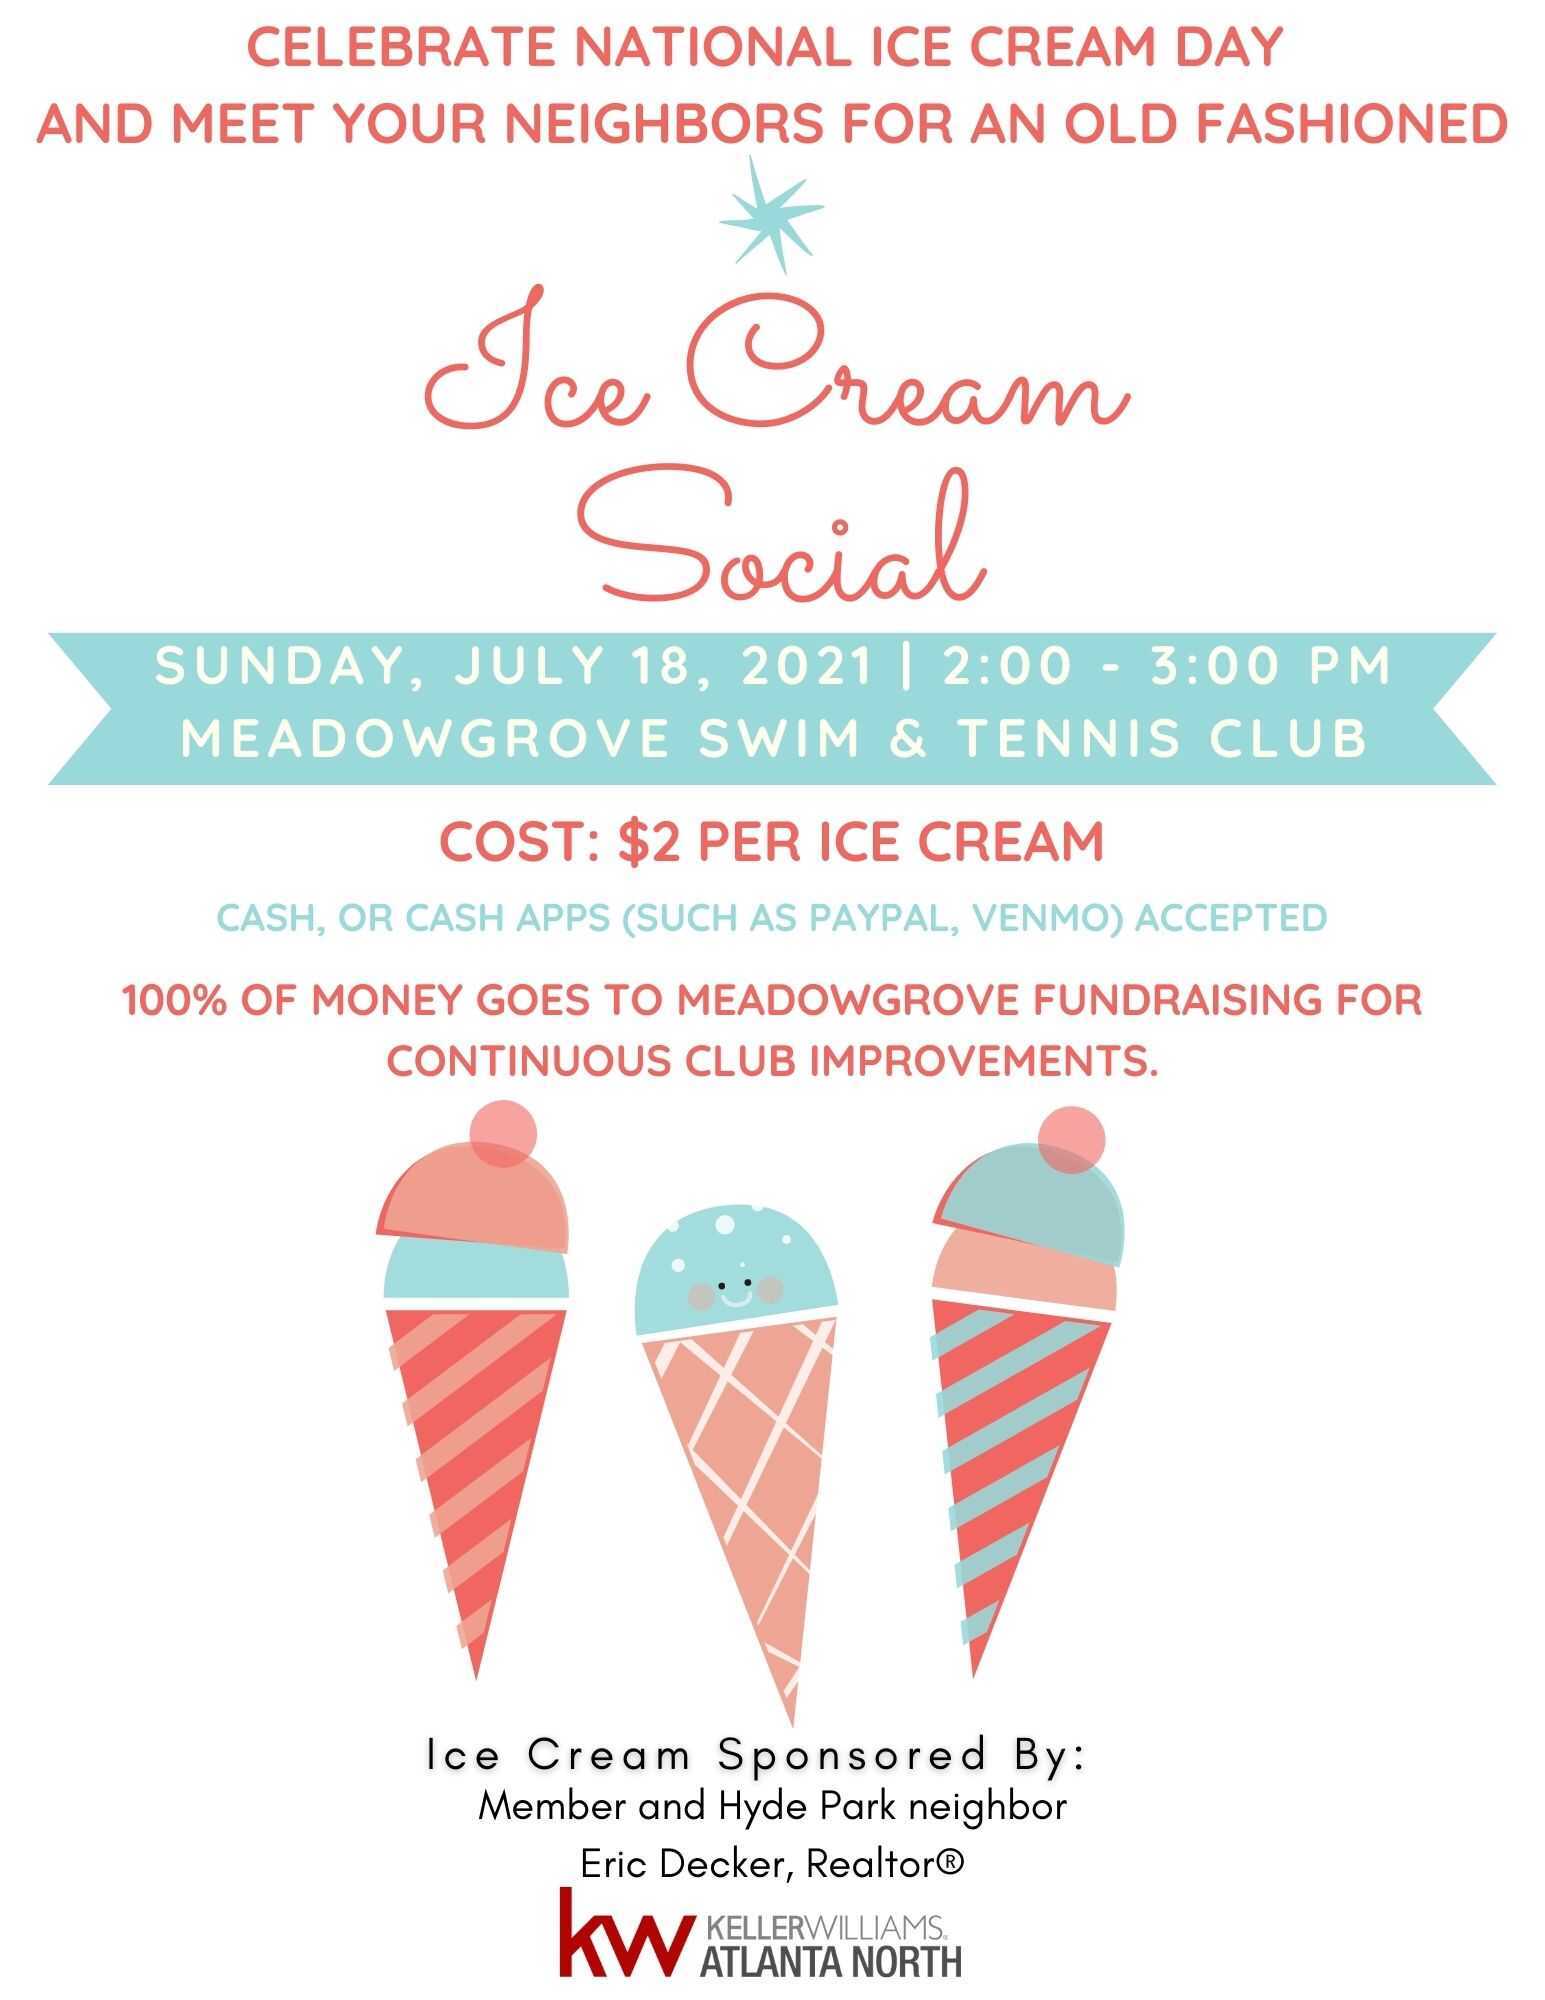 Ice Cream Social sponsored by Eric Decker,realtor, Keller Williams